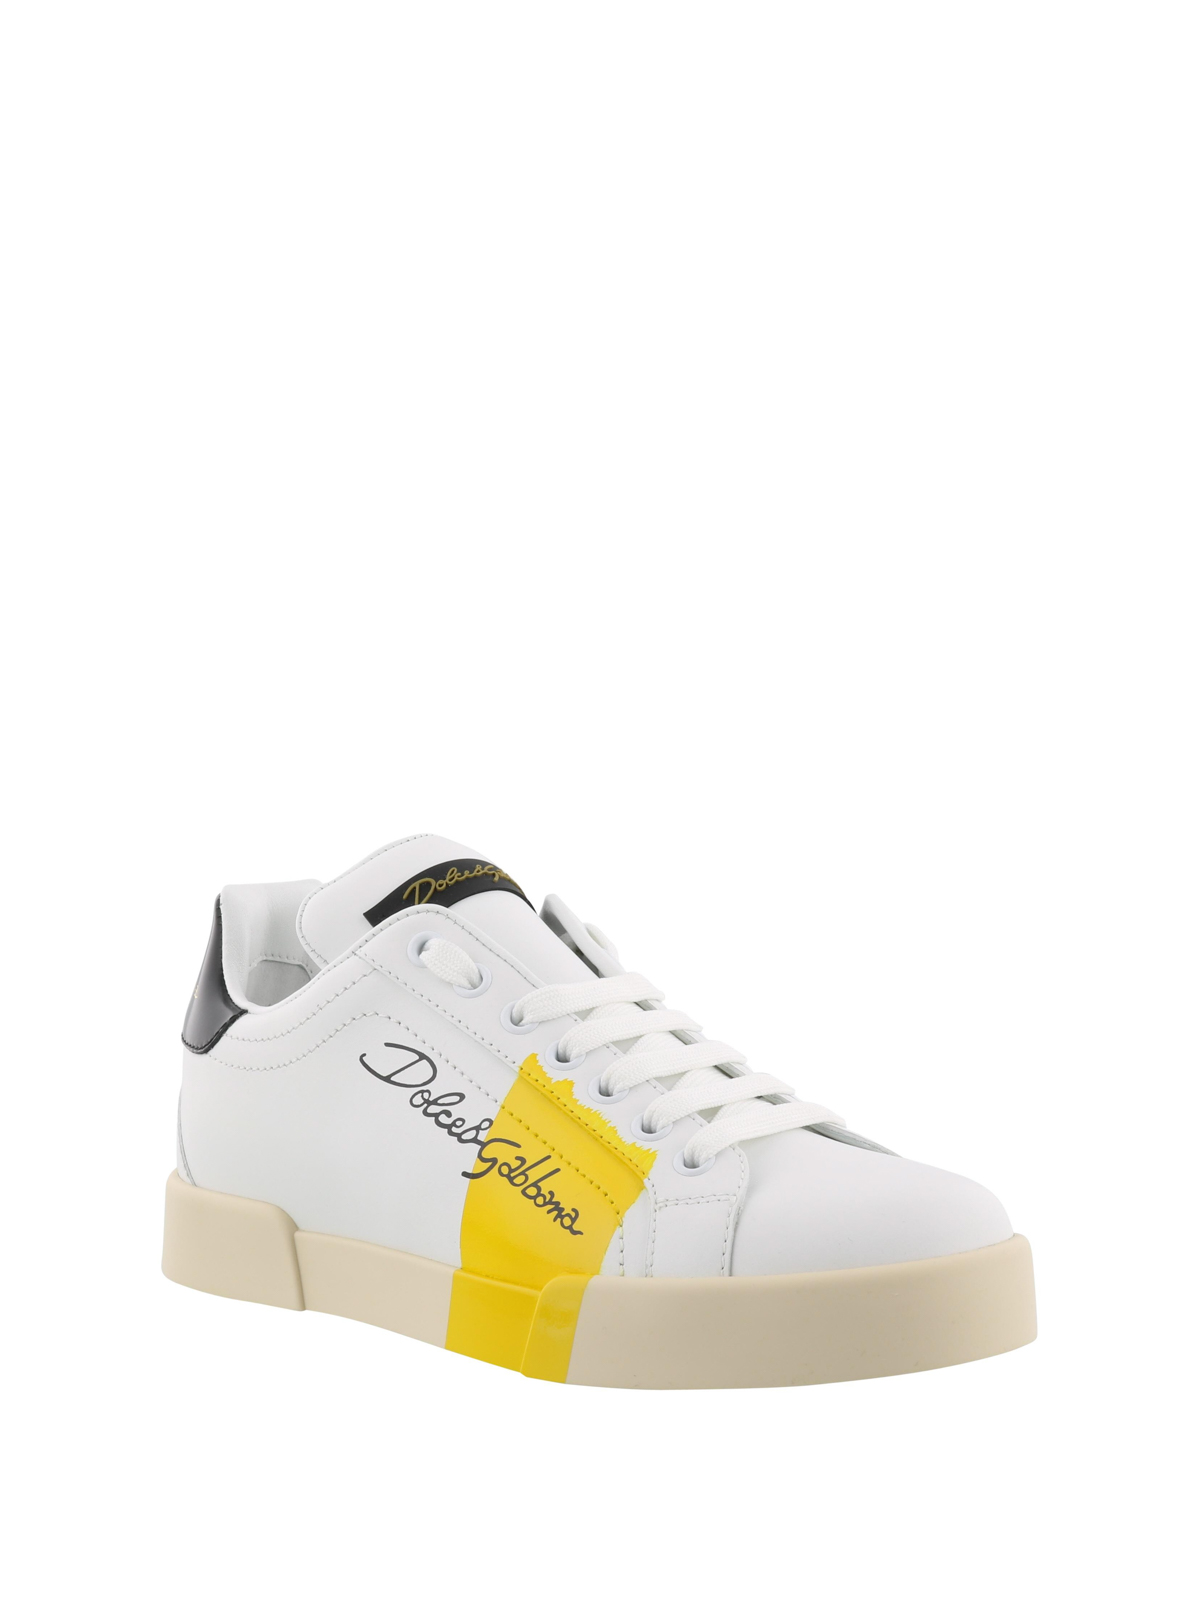 dolce gabbana yellow sneakers